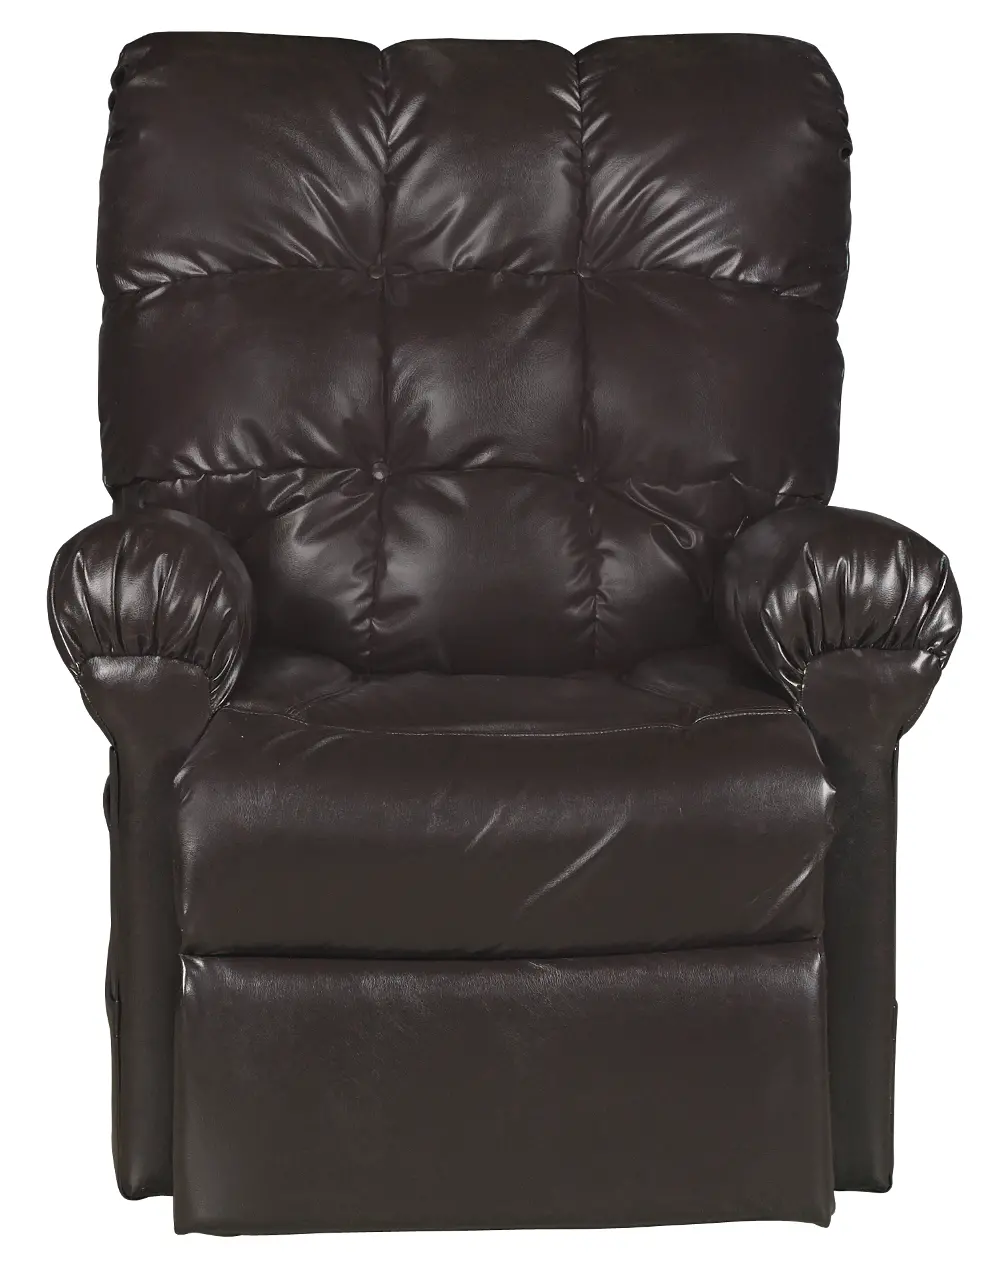 Chestnut Brown Reclining Lift Chair - Wonderful Chair-1